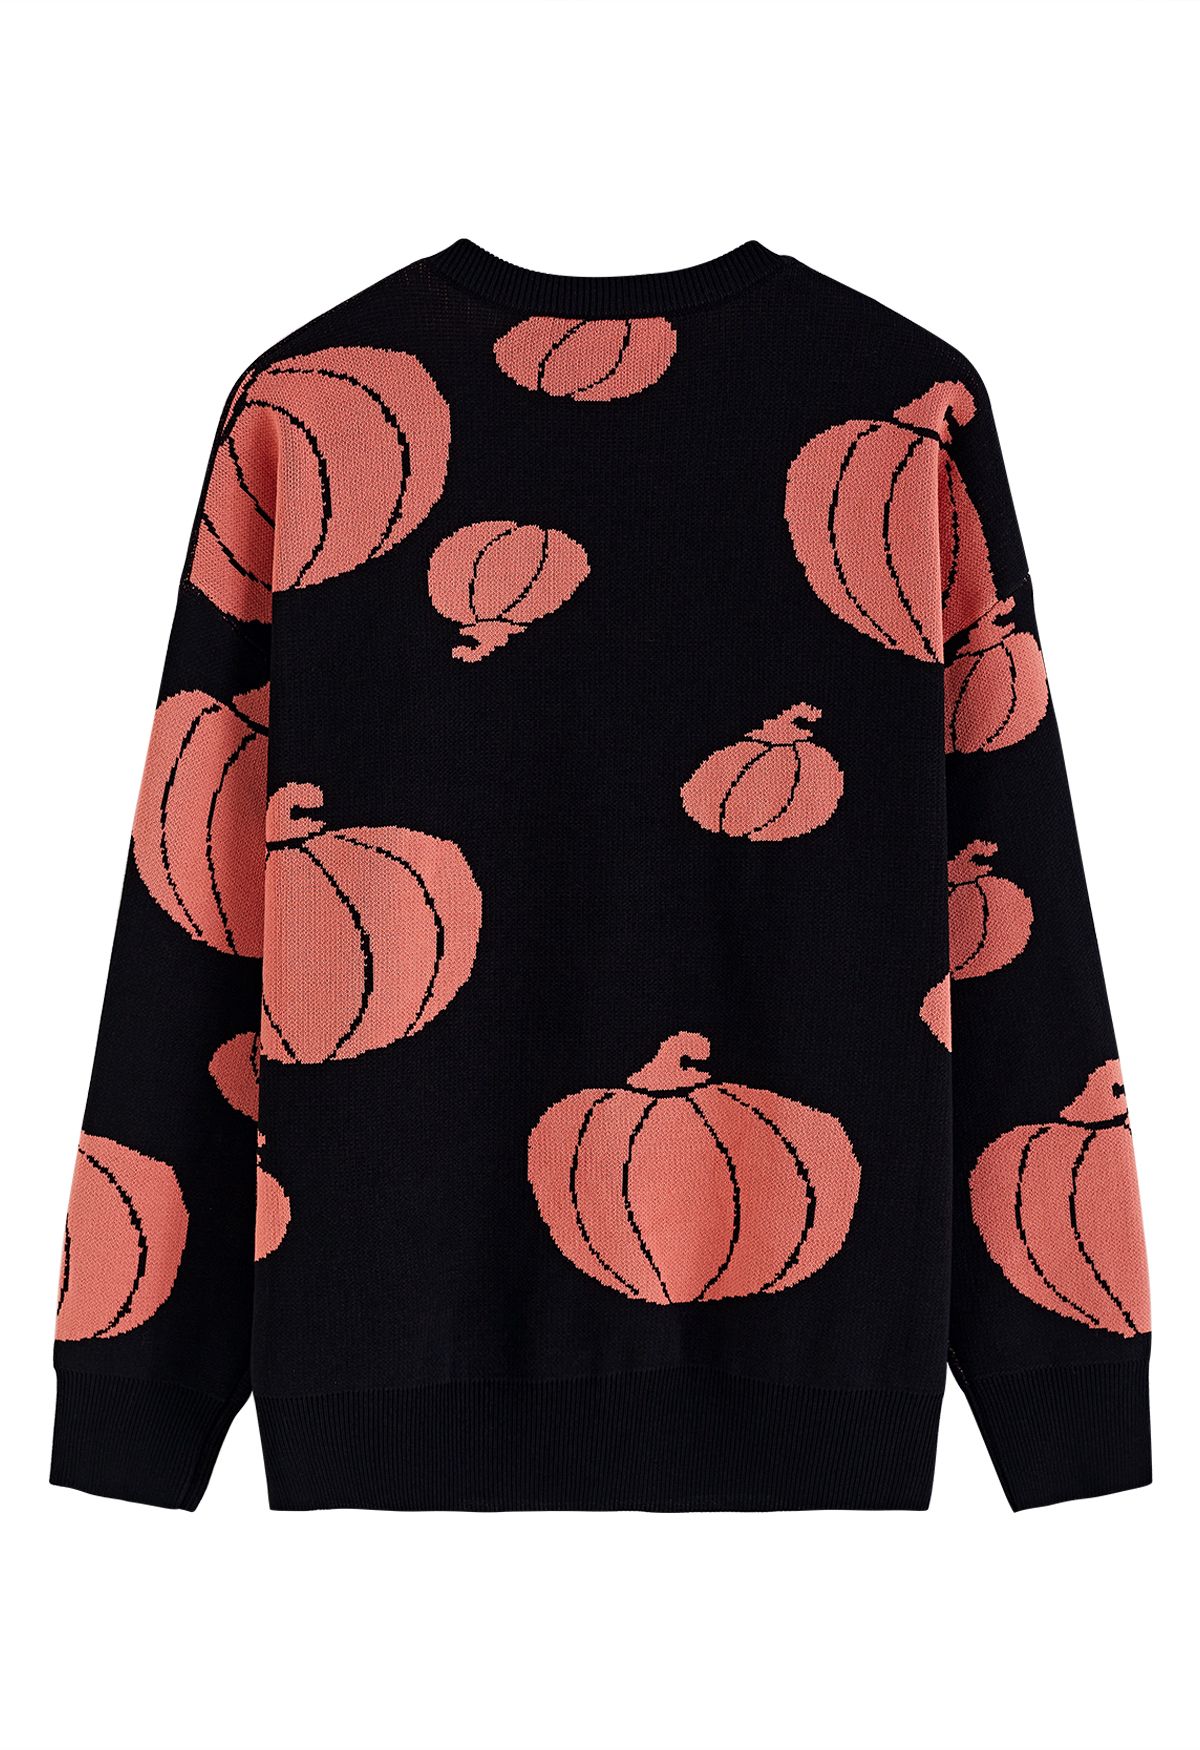 Halloween Pumpkin Lantern Knit Sweater